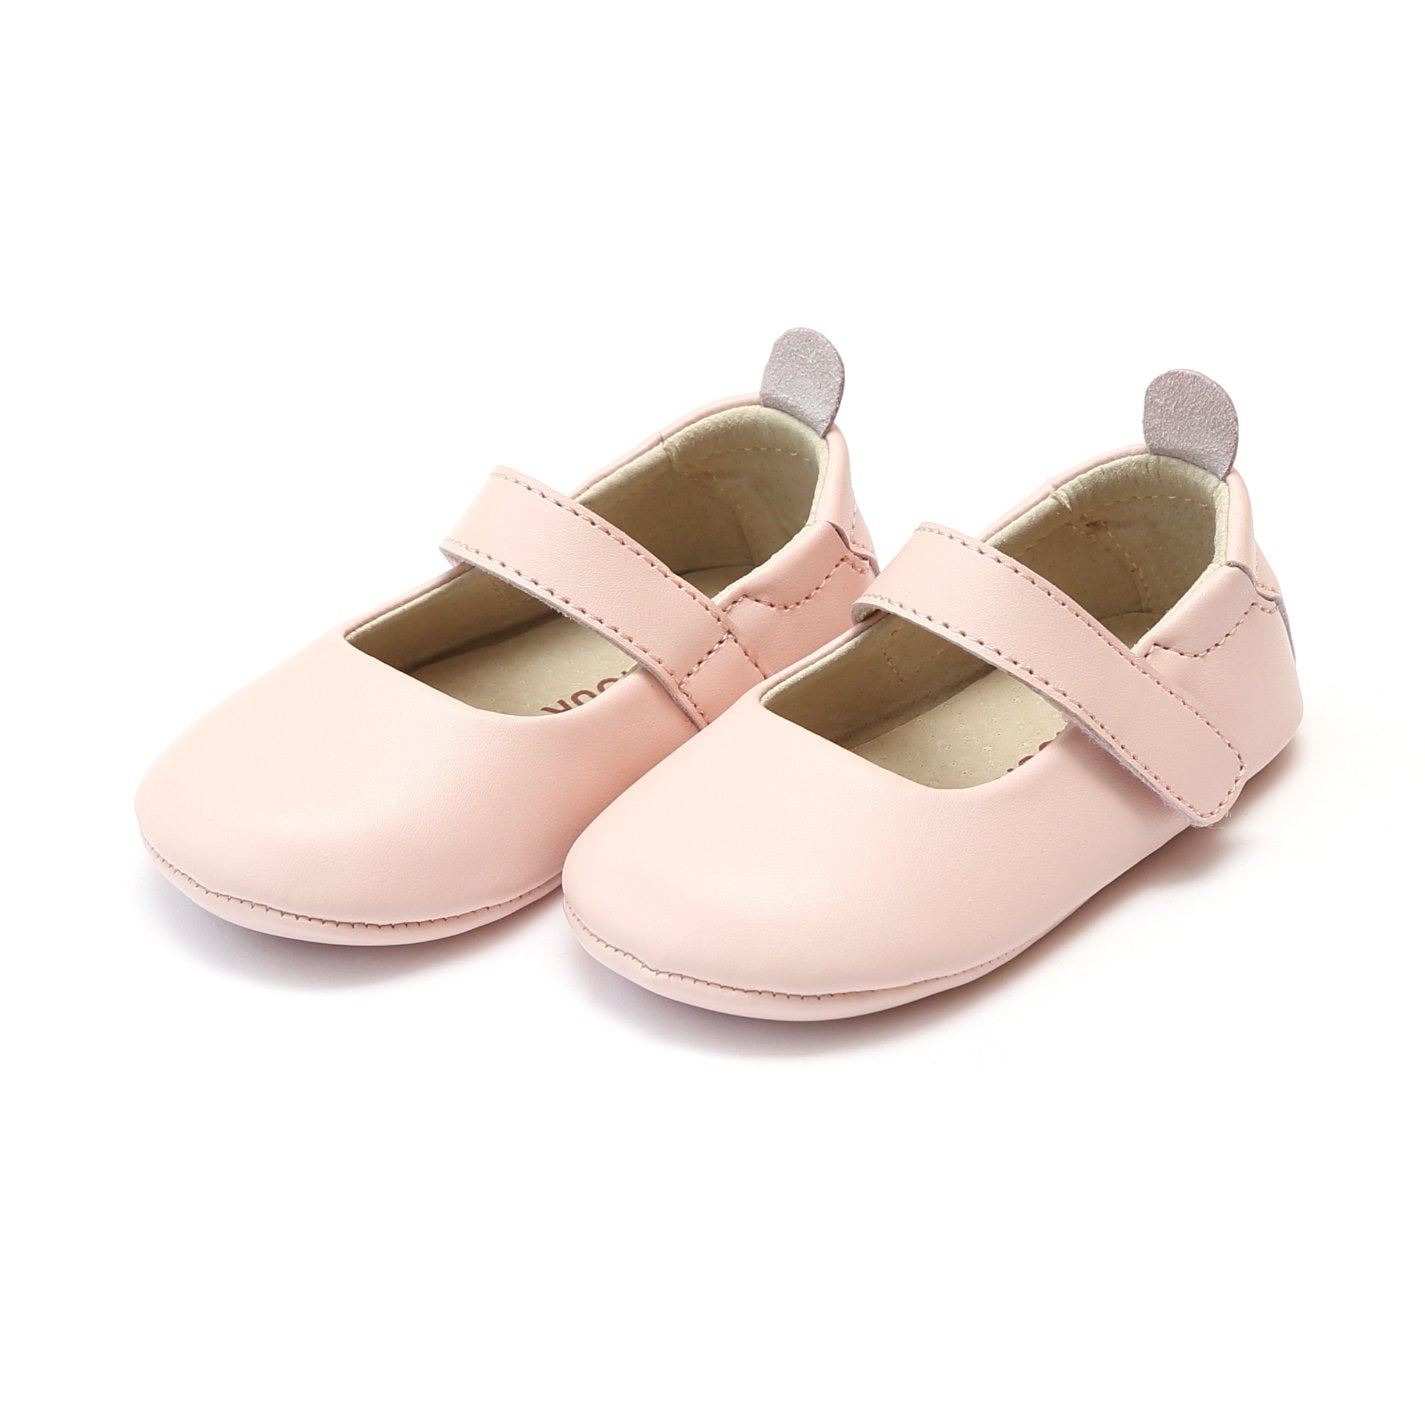 Charlotte Crib Shoe Girls Shoes L'Amour Pink 0 